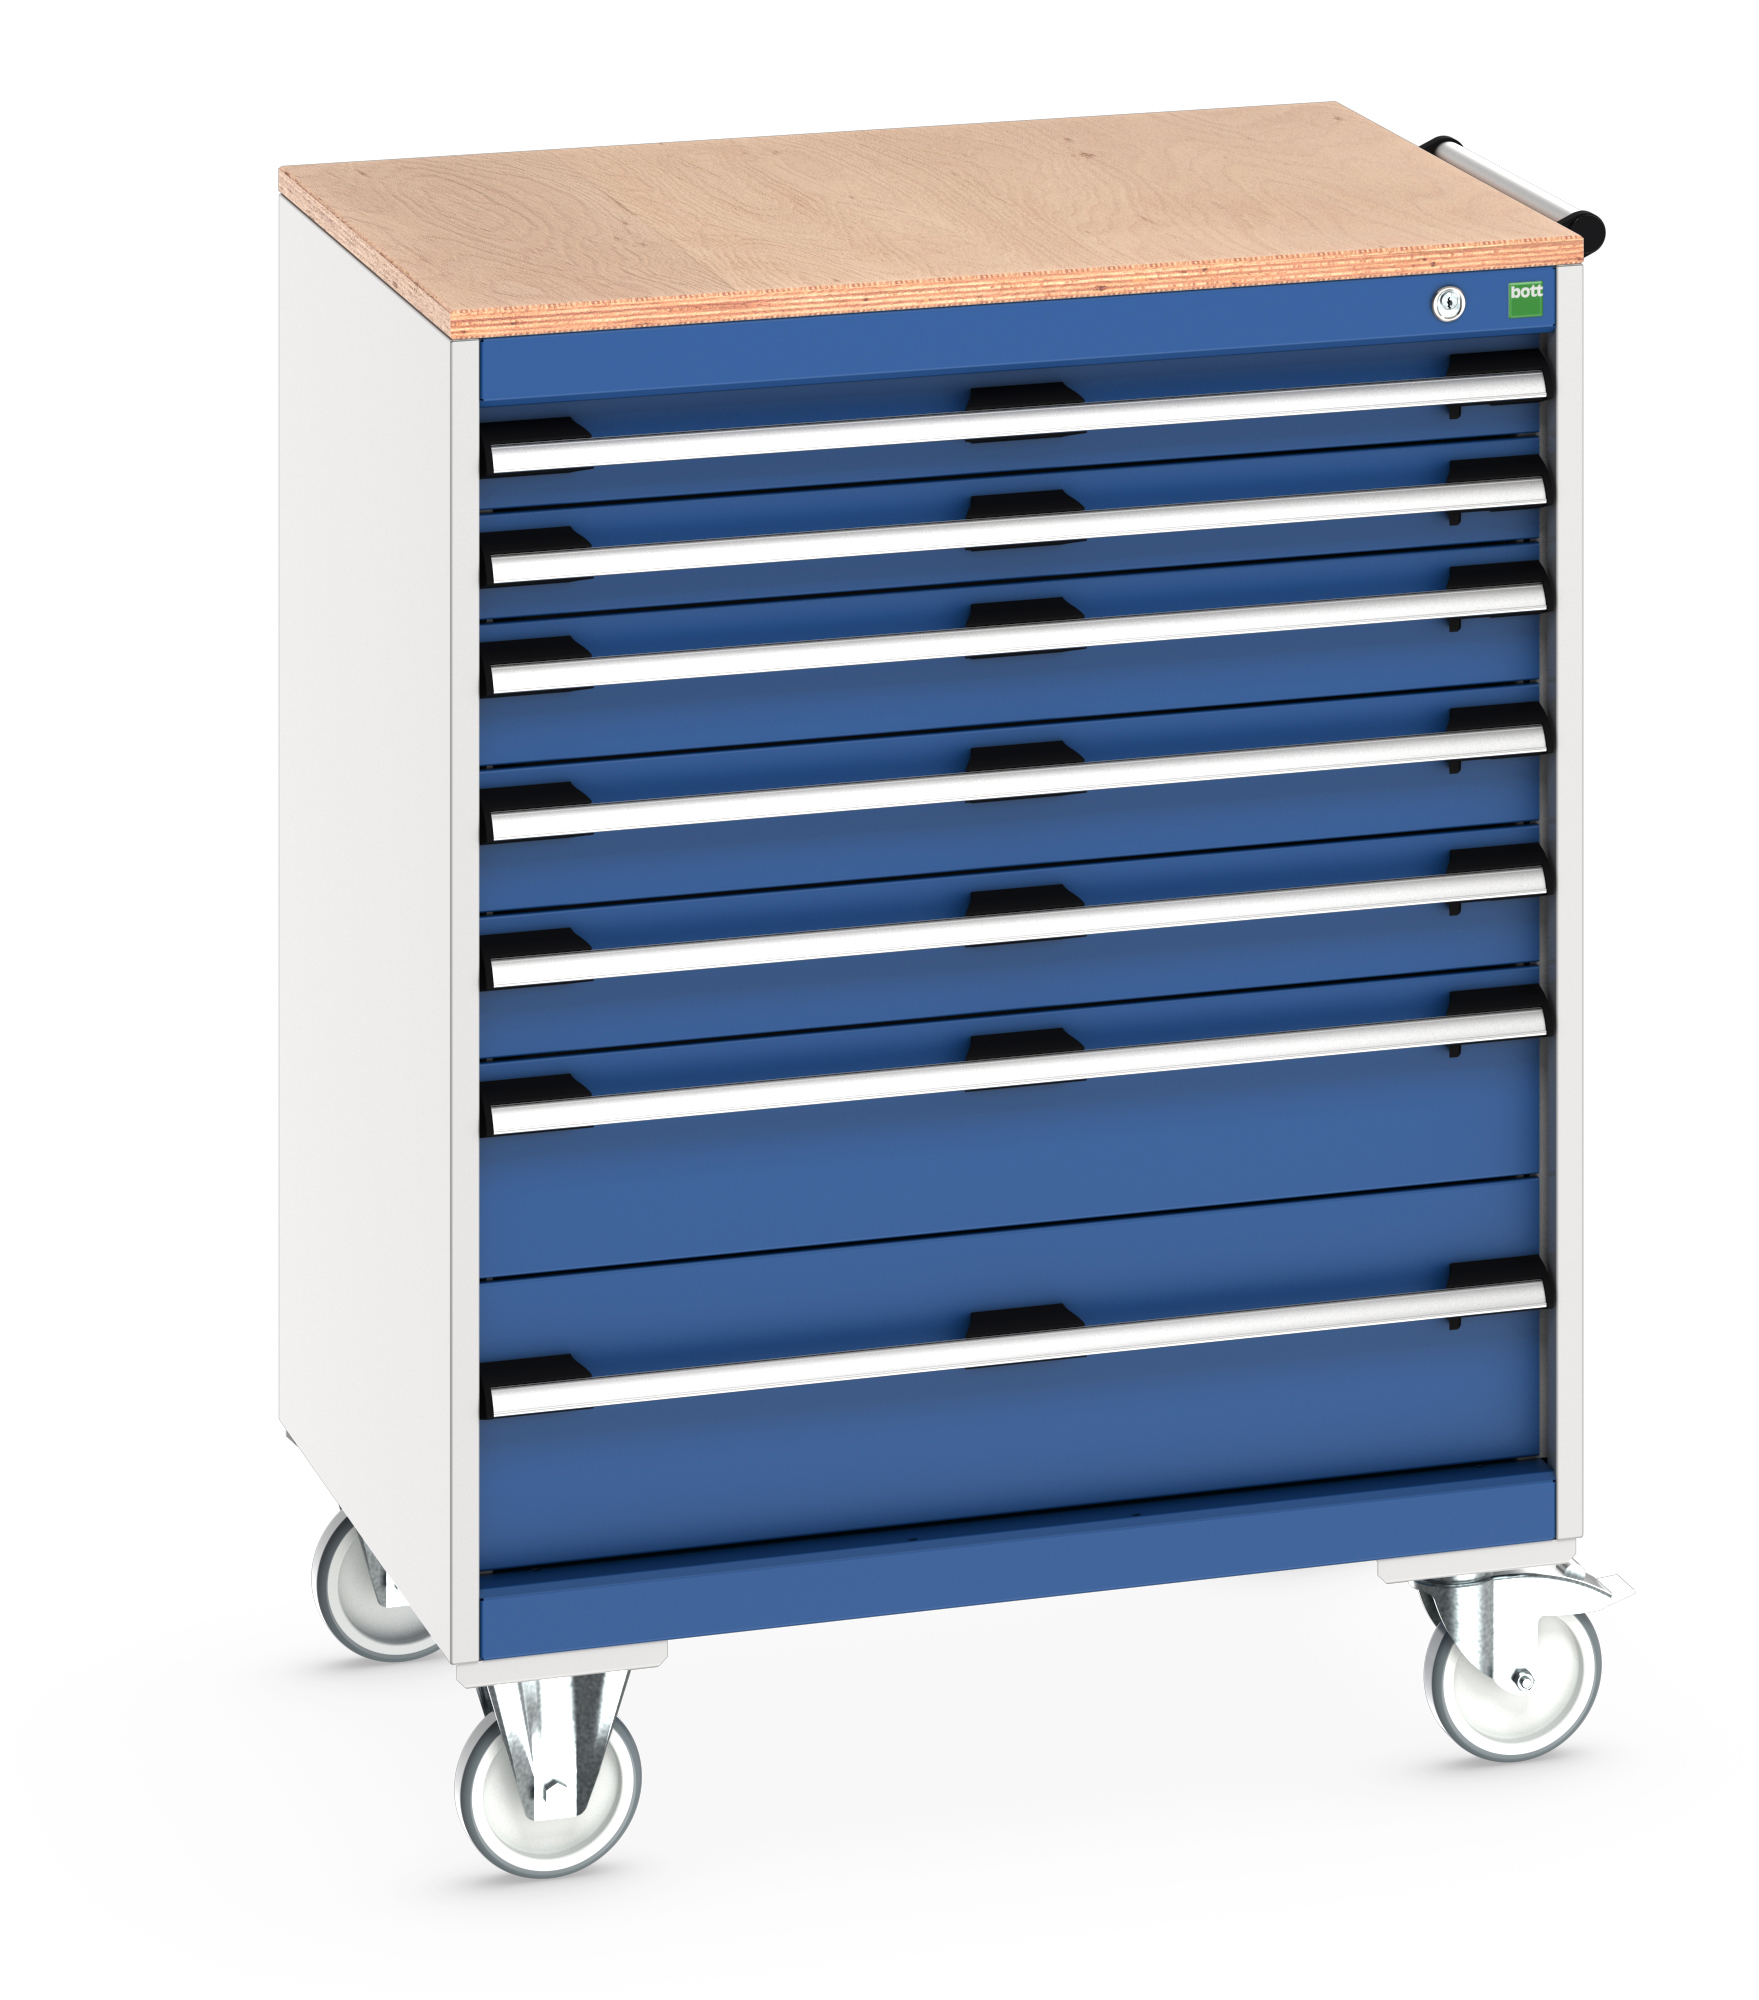 Bott Cubio Mobile Drawer Cabinet With 7 Drawers & Multiplex Worktop - 40402161.11V